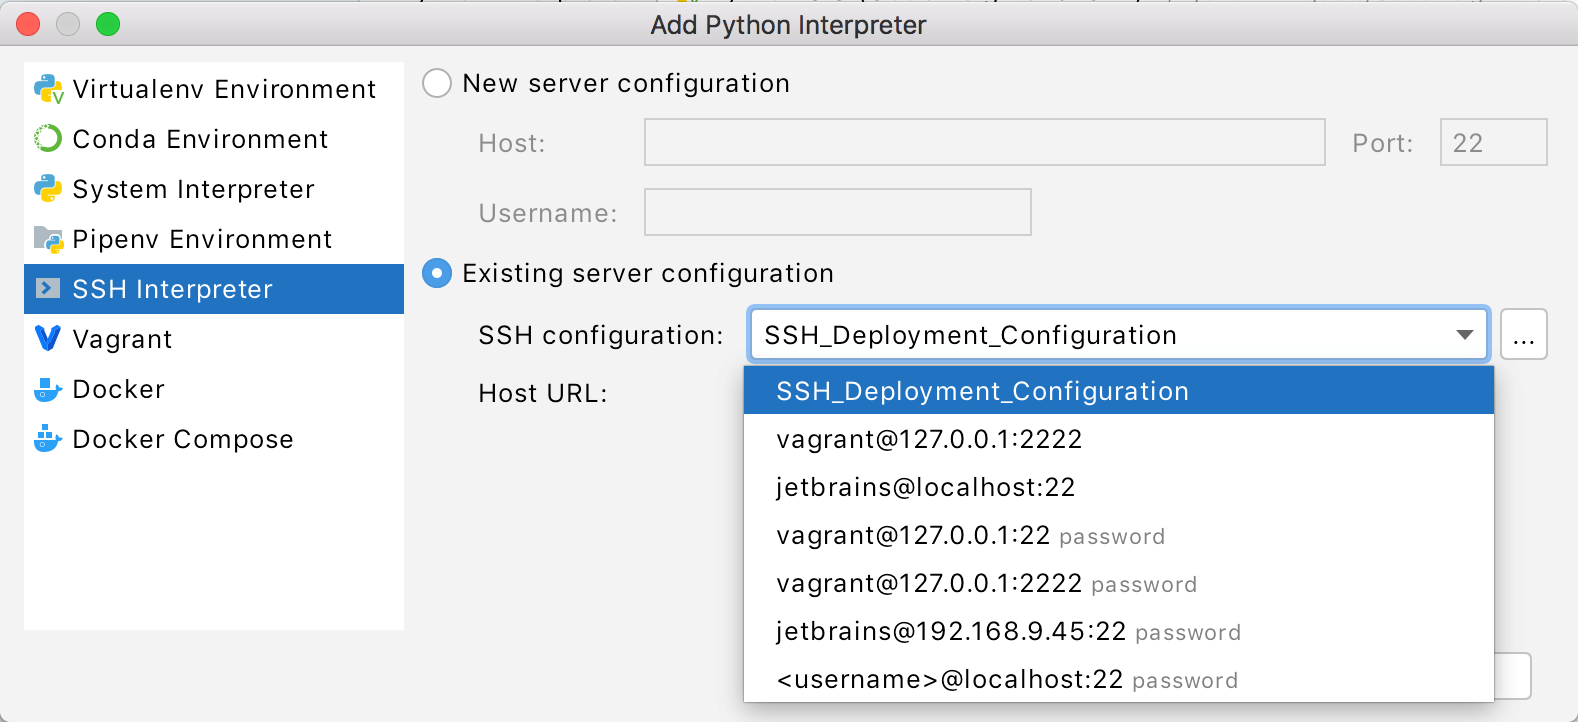 Existing SSH configuration